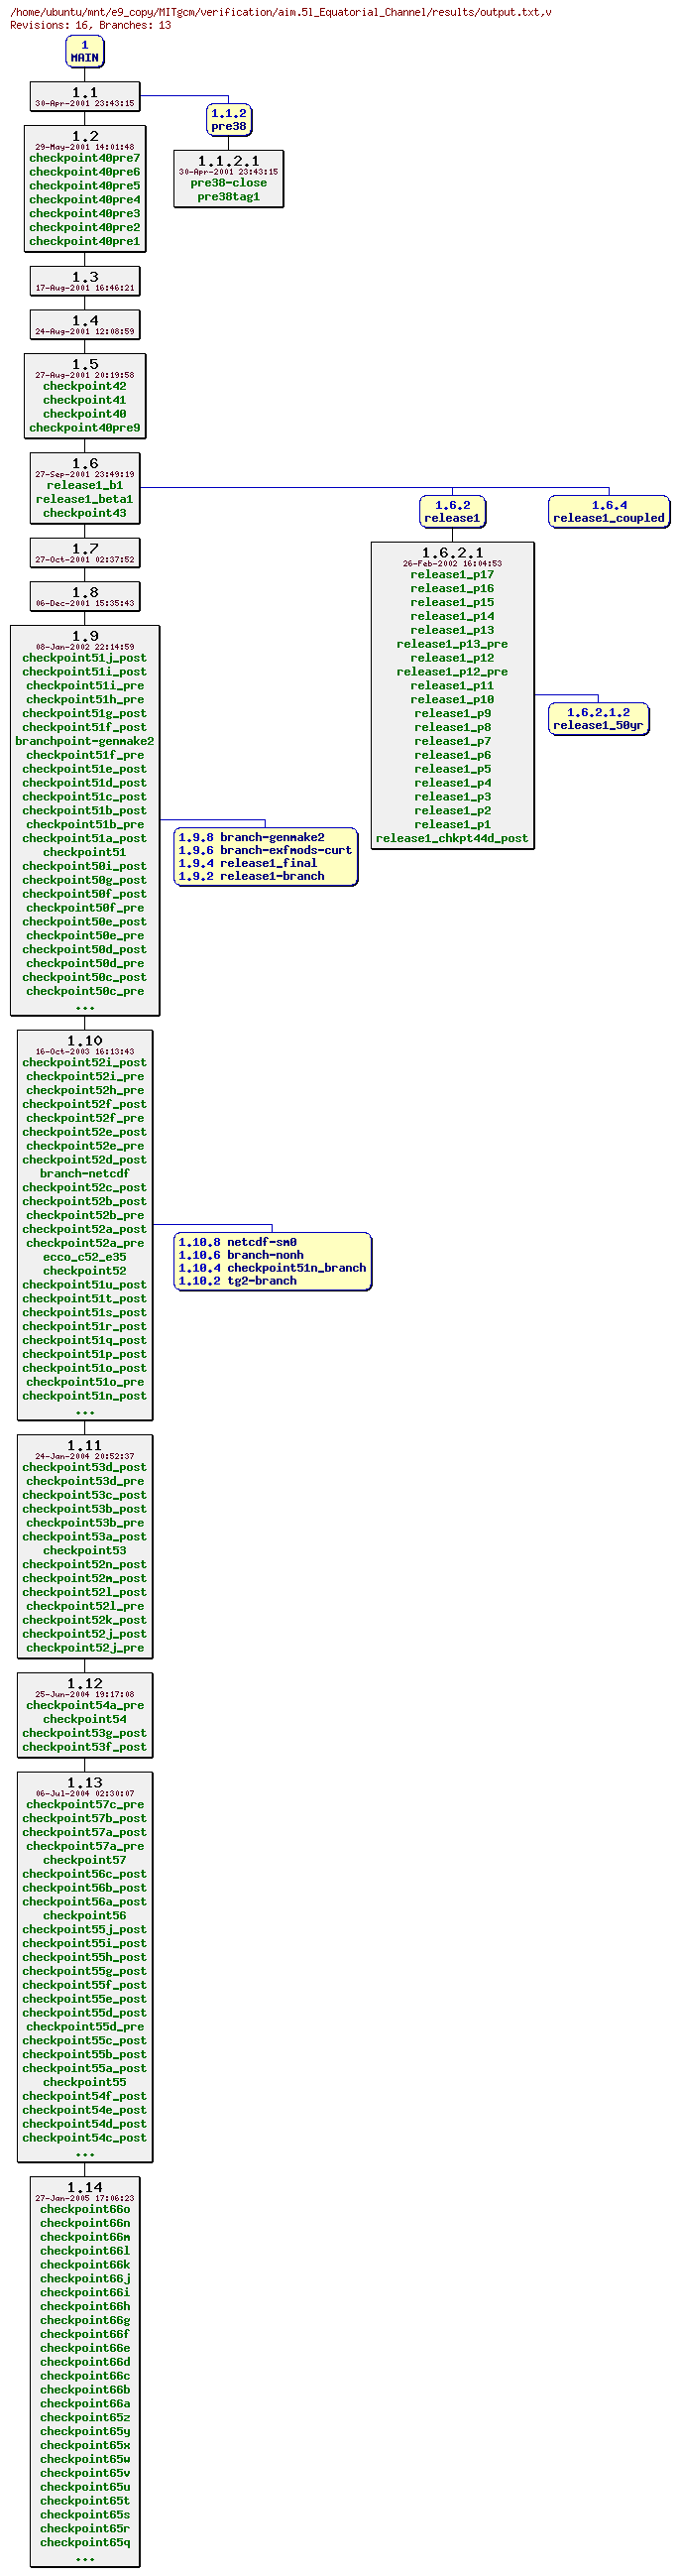 Revisions of MITgcm/verification/aim.5l_Equatorial_Channel/results/output.txt